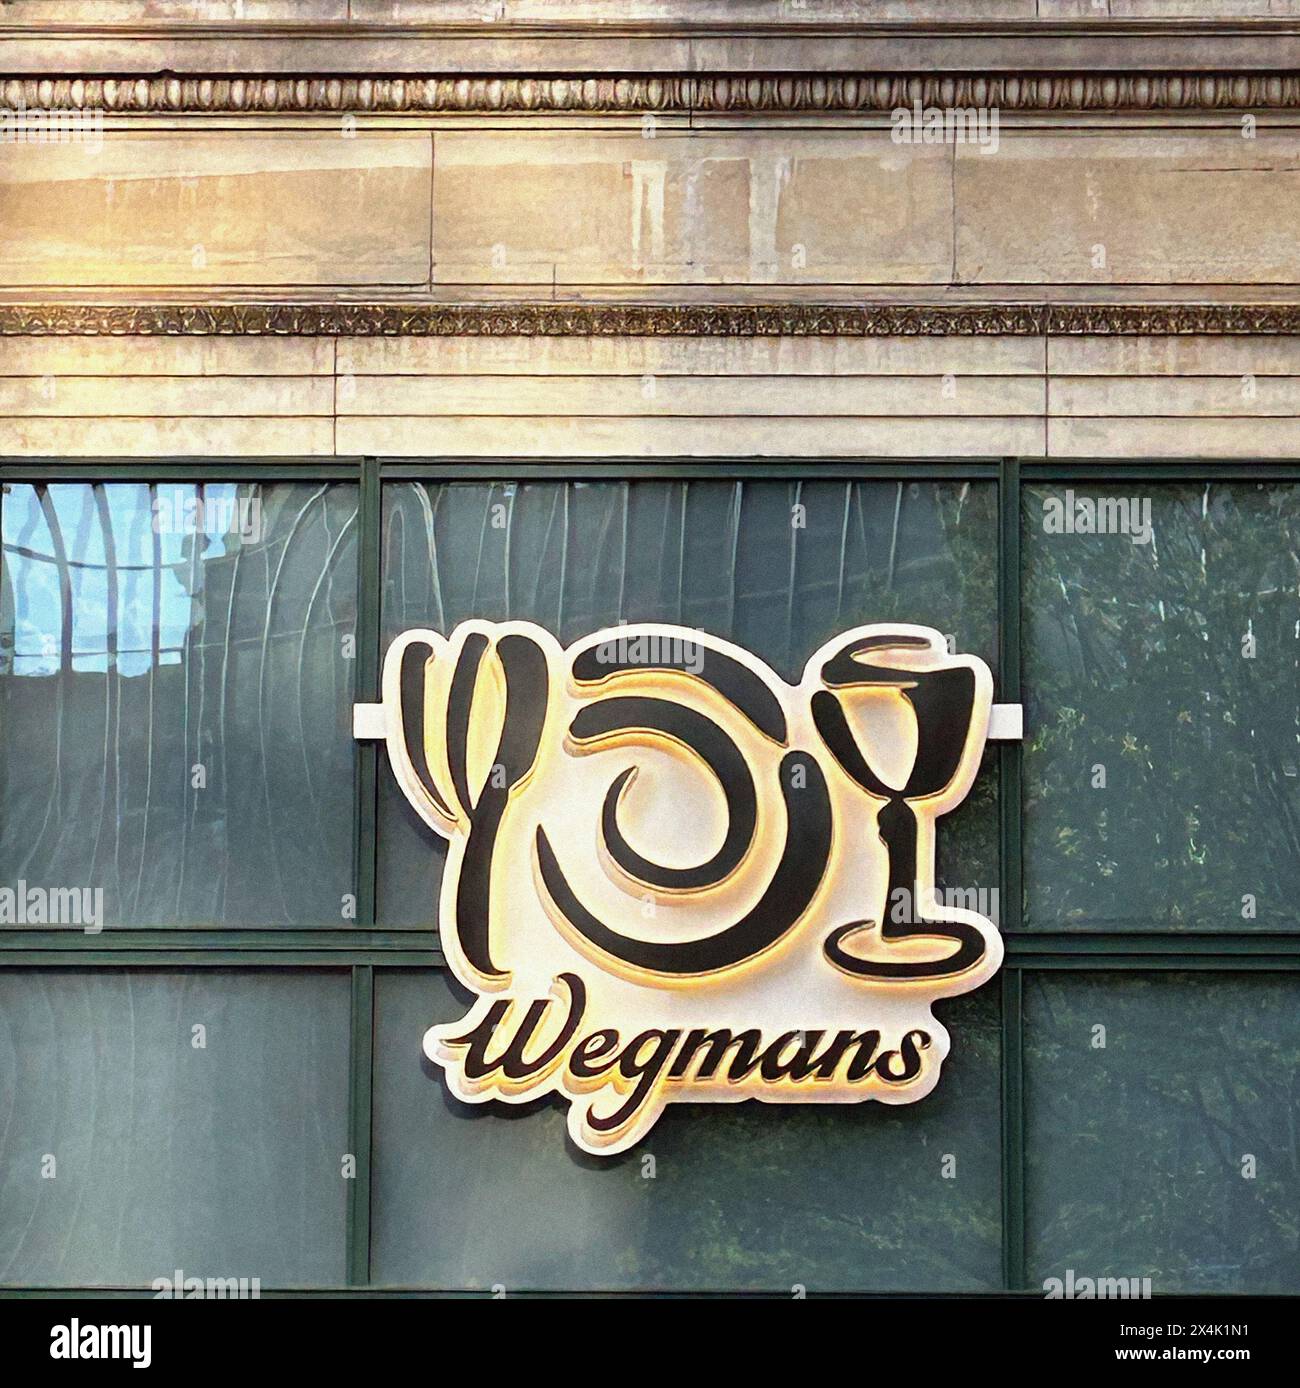 Wegmans Food Market, company logo, building exterior, New York City, New York, USA Stock Photo